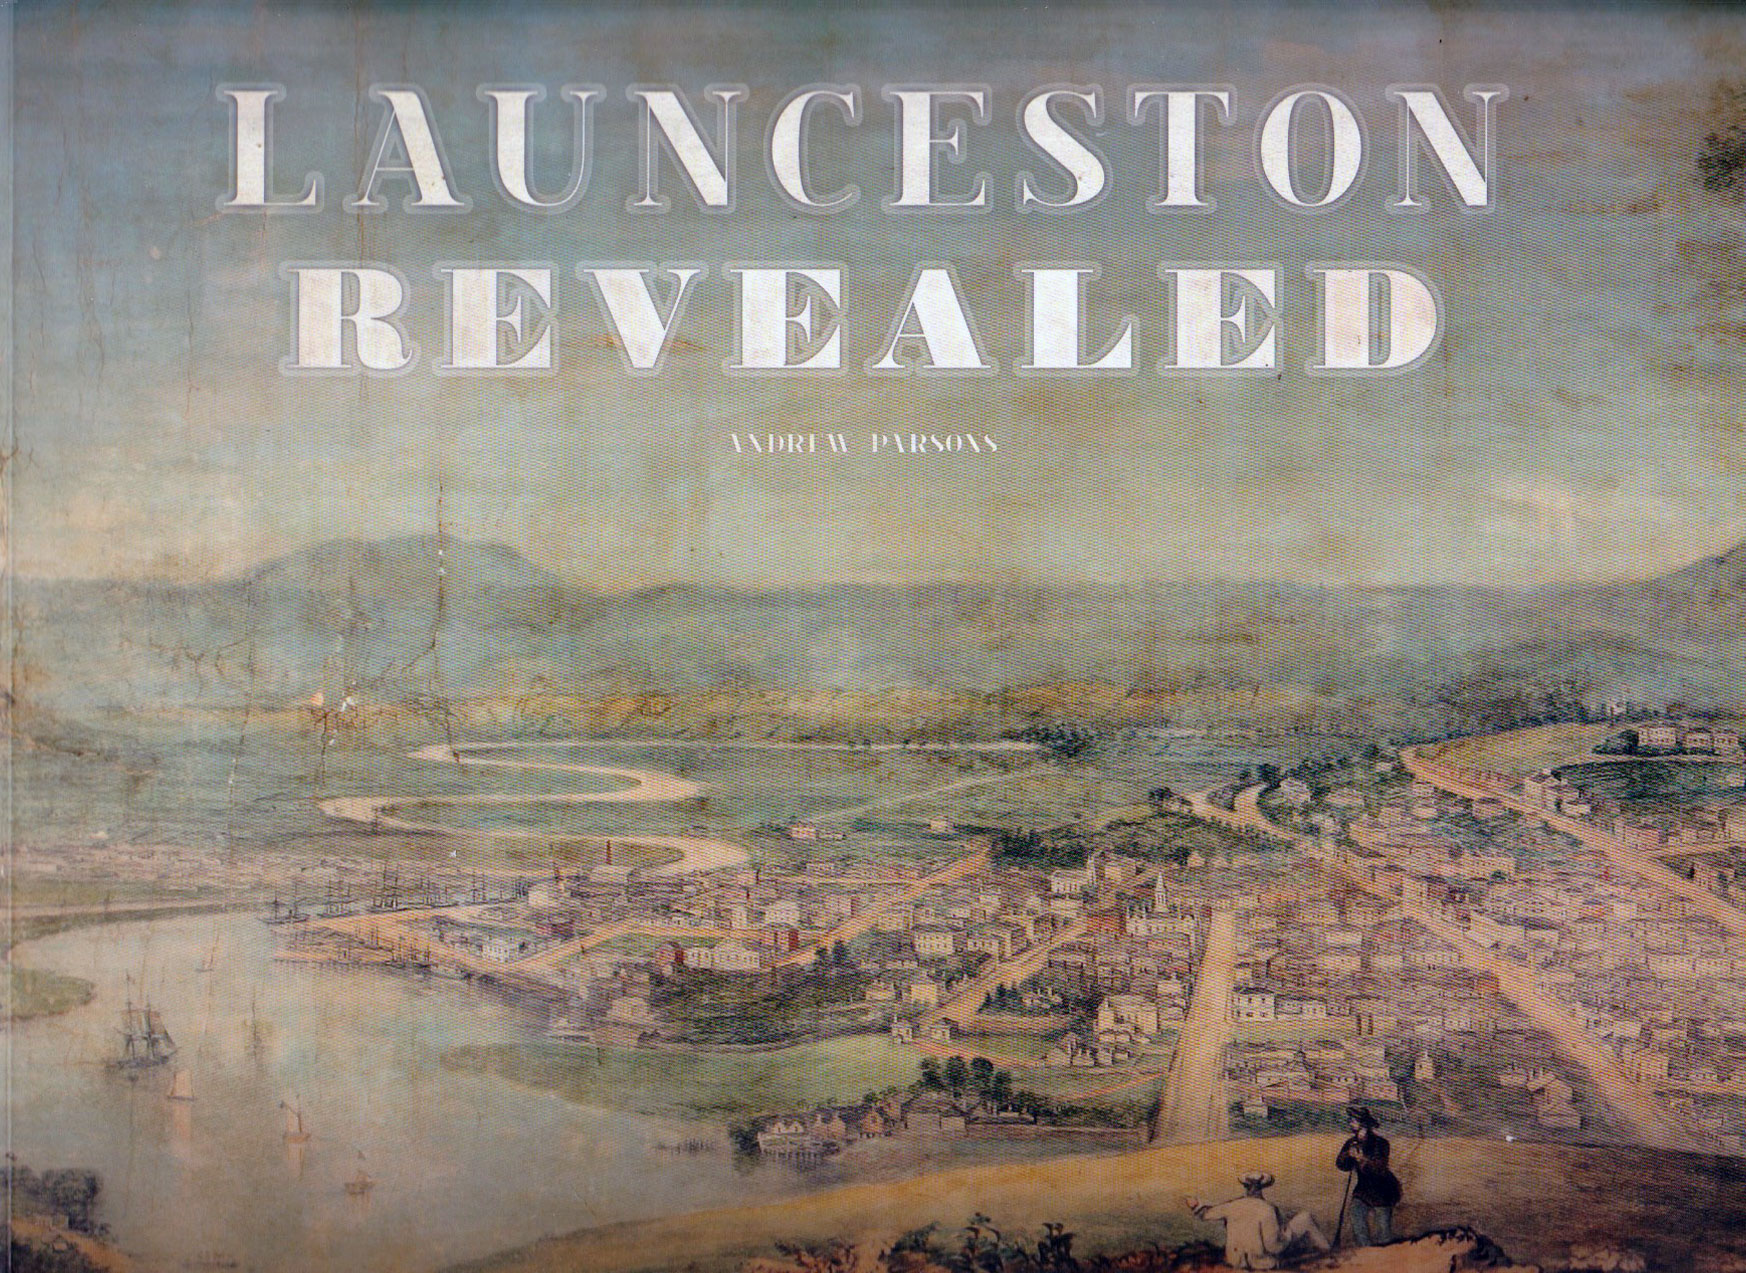 Launceston Revealed - History through maps